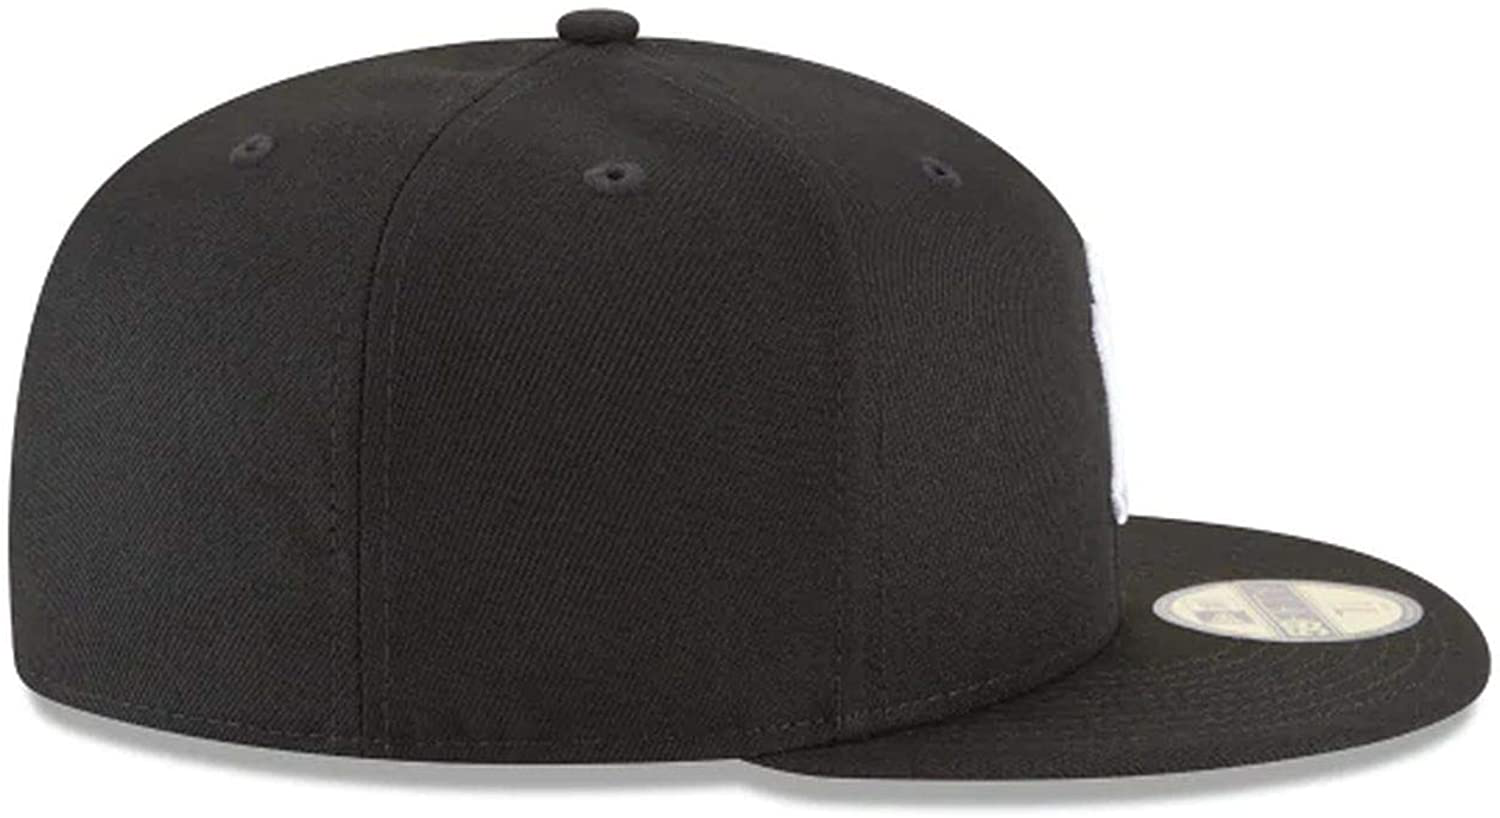 New Era 59FIFTY MLB New York Yankees Basic Black/White Fitted Cap 11591127